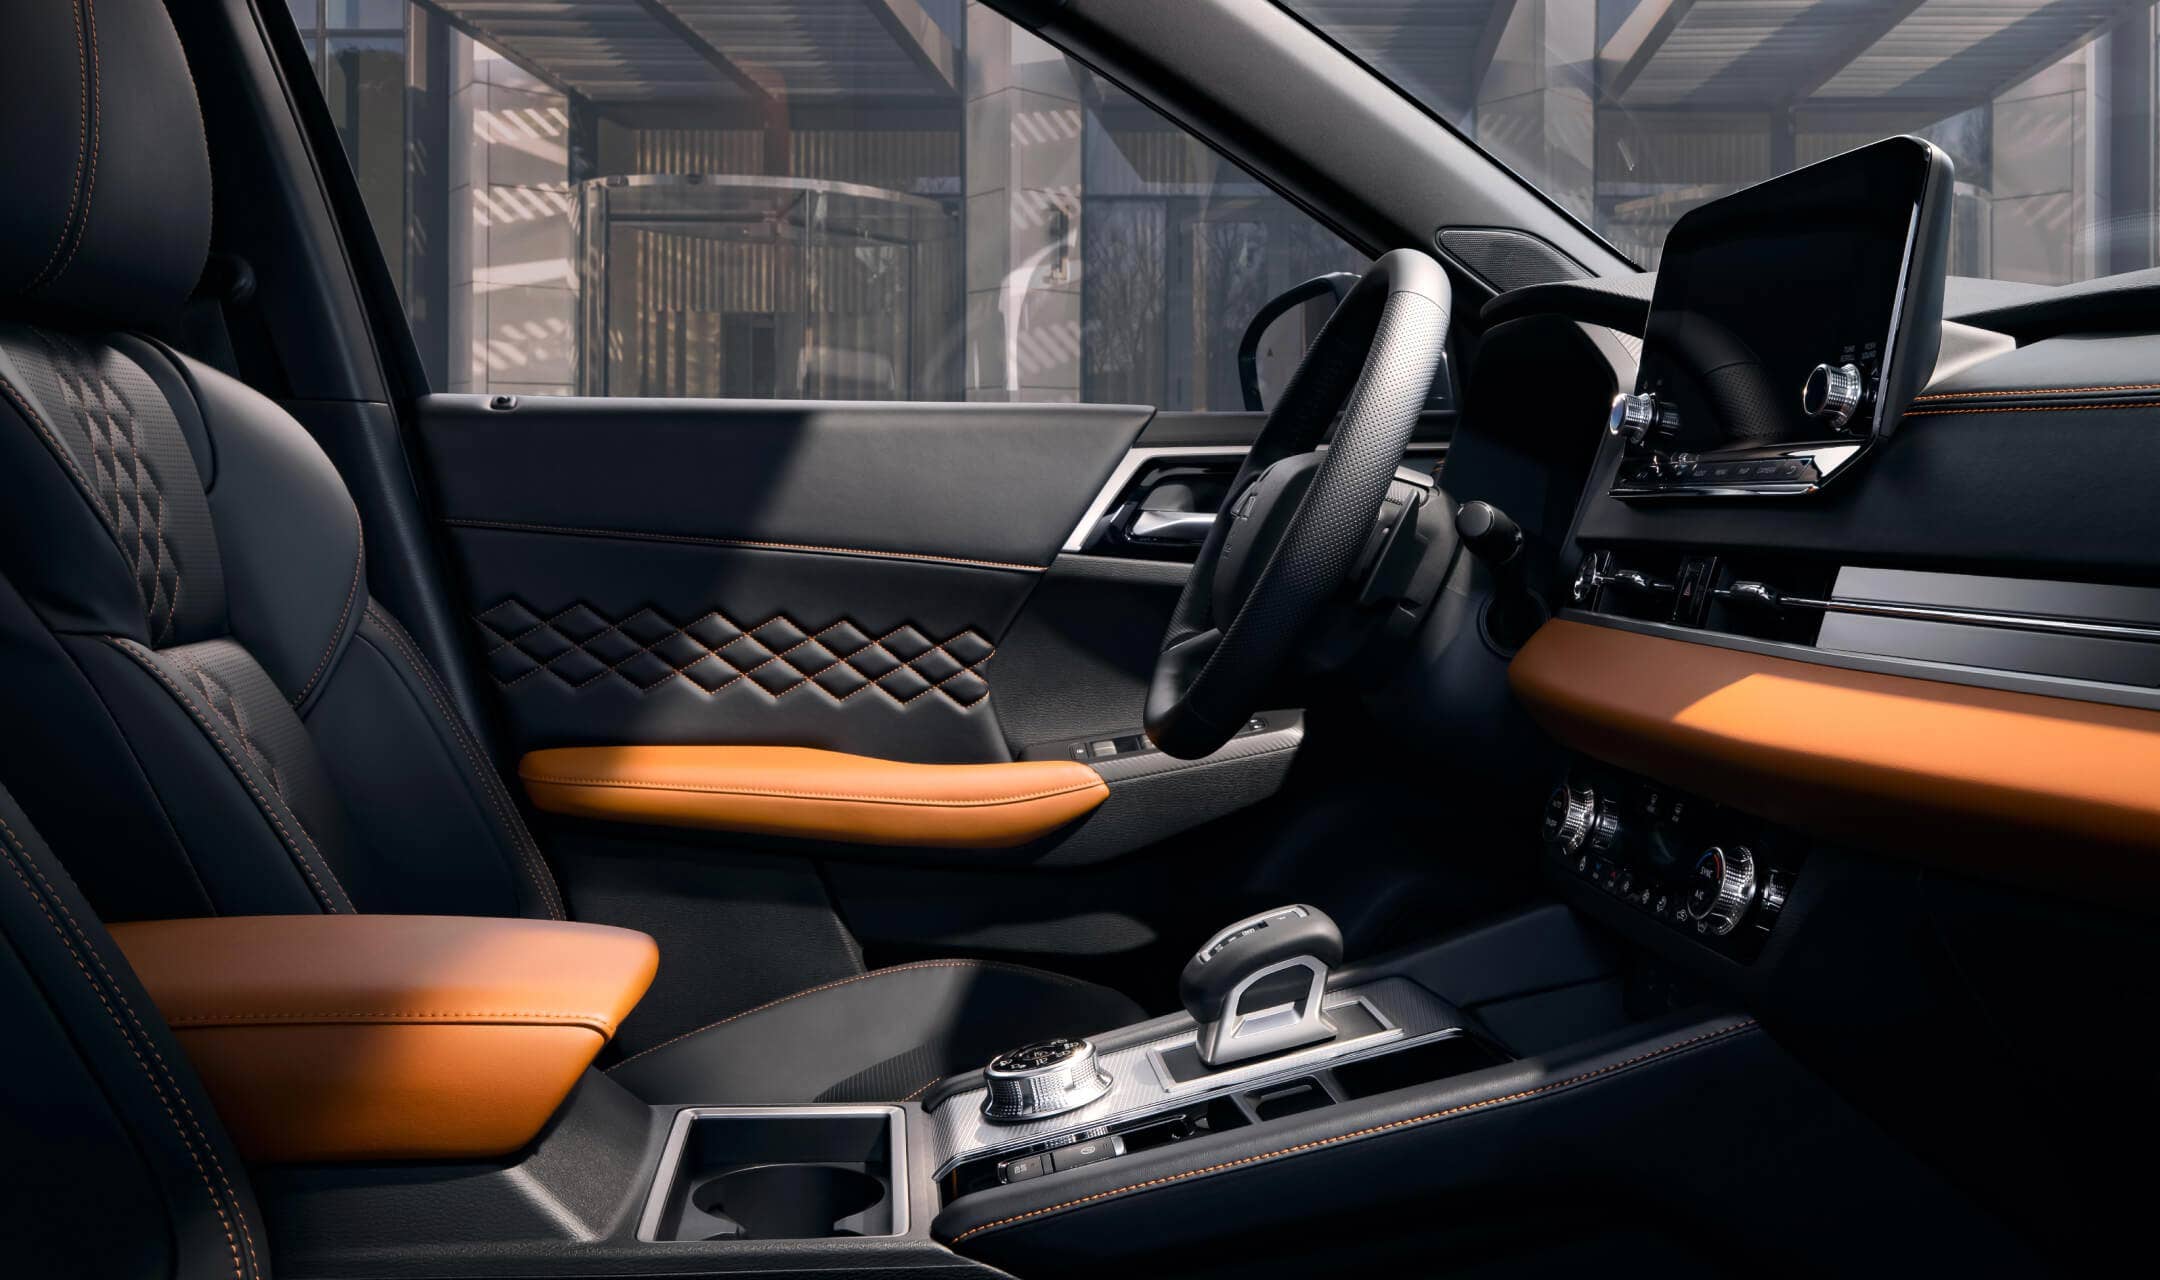 Interior and driver seat of the 2023 Mitsubishi Outlander SUV